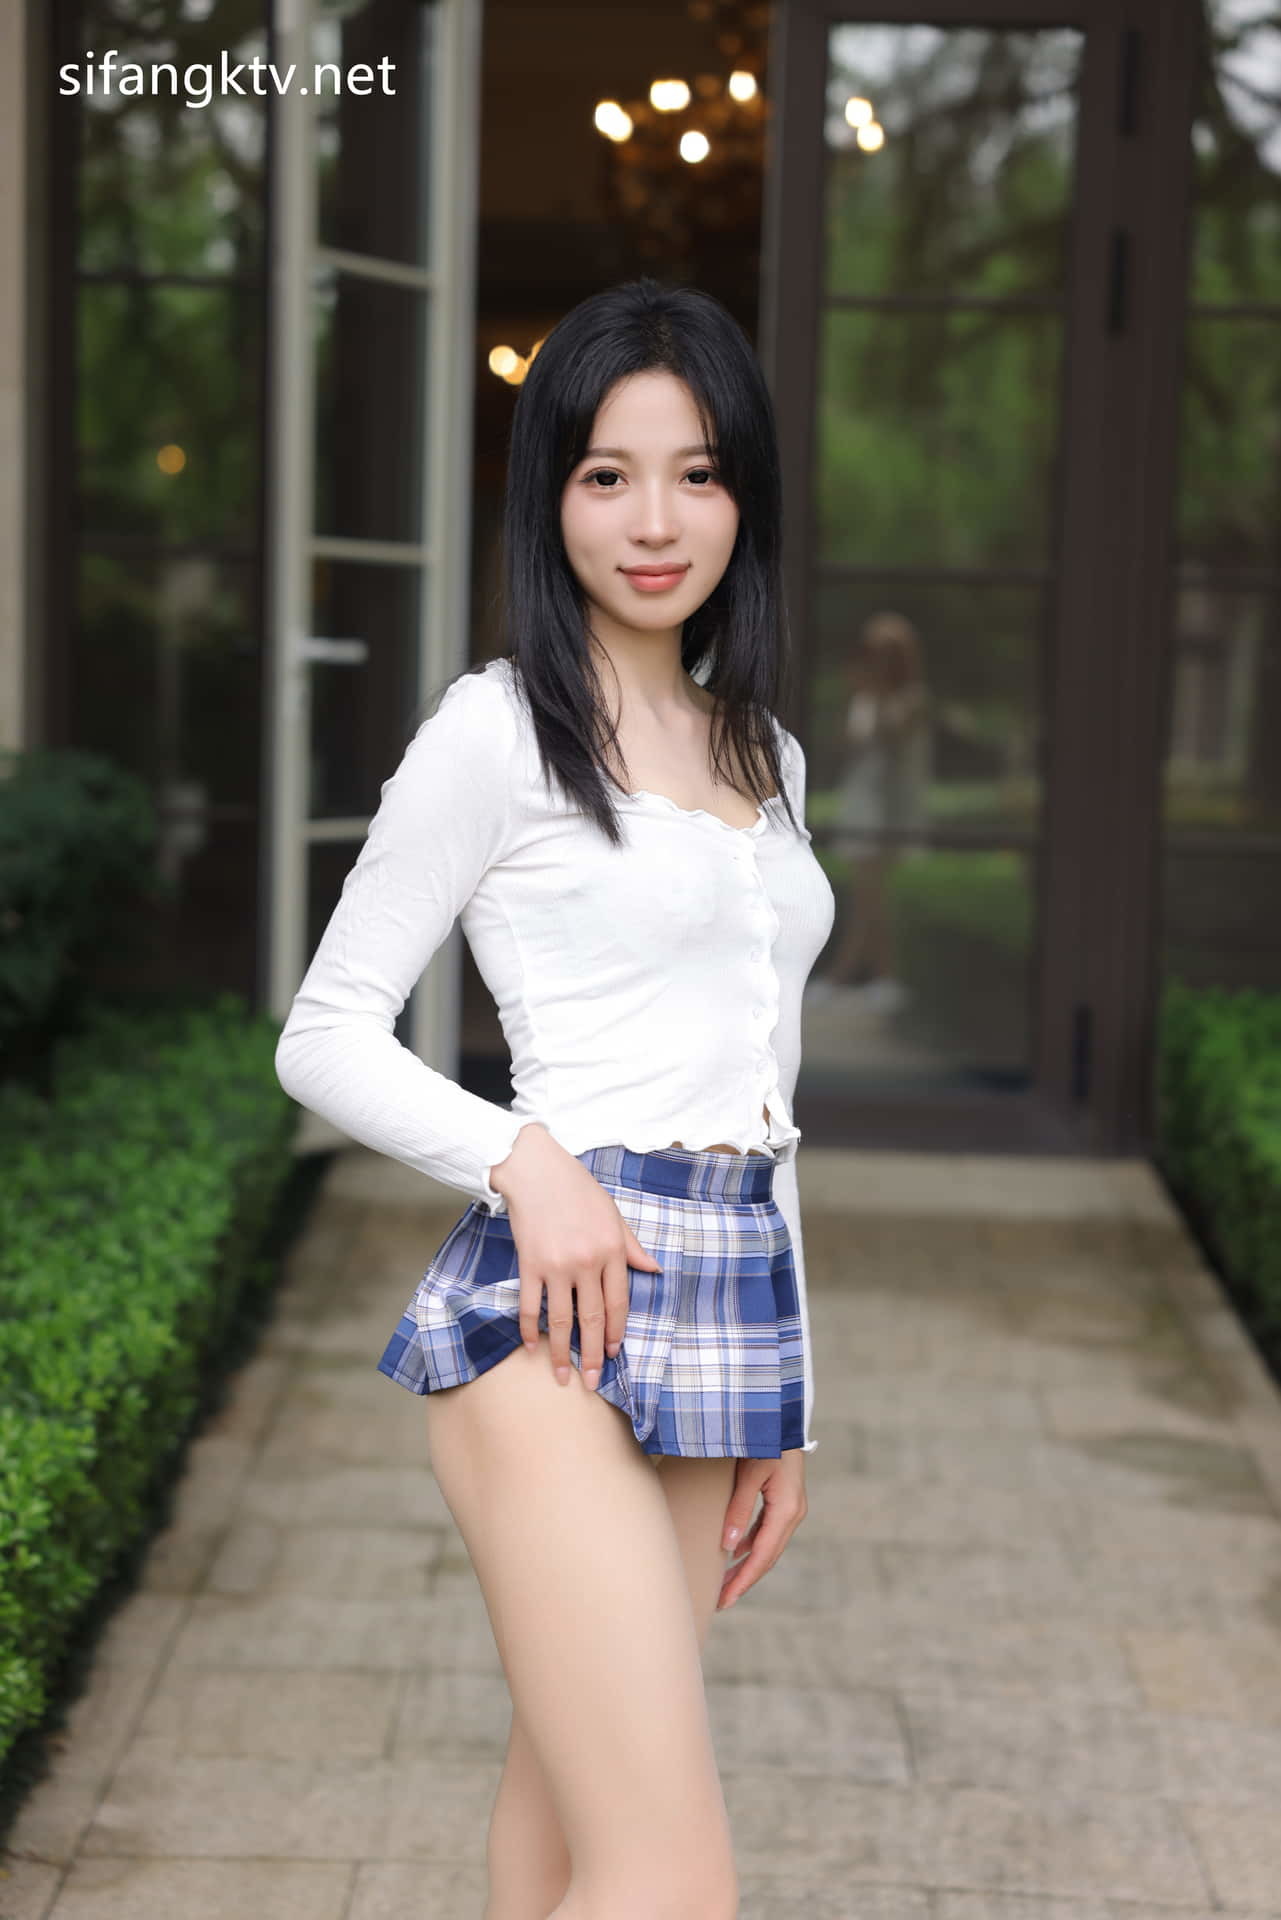 Xiuren.com 모델의 가장 청순한 여신 [Jelly Bean]을 유혹하고 비공개 사진을 찍습니다 ~ 3 점 + 교복 공개